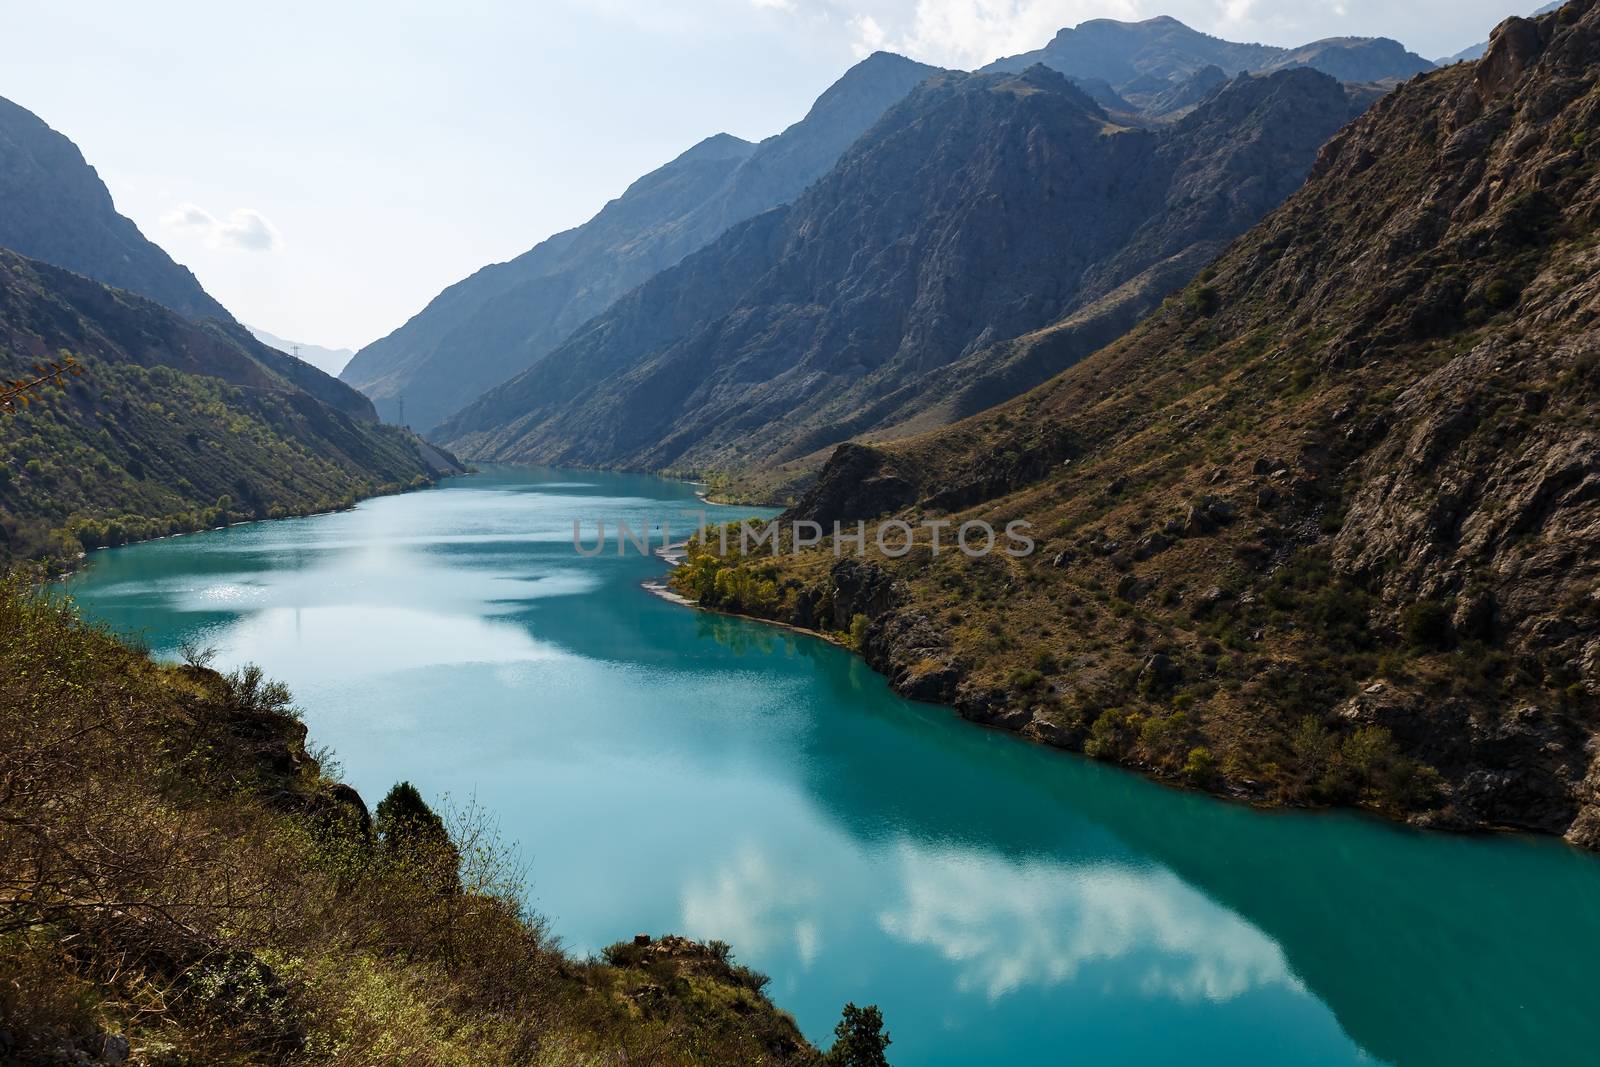 The Naryn River, Kyrgyzstan by Mieszko9